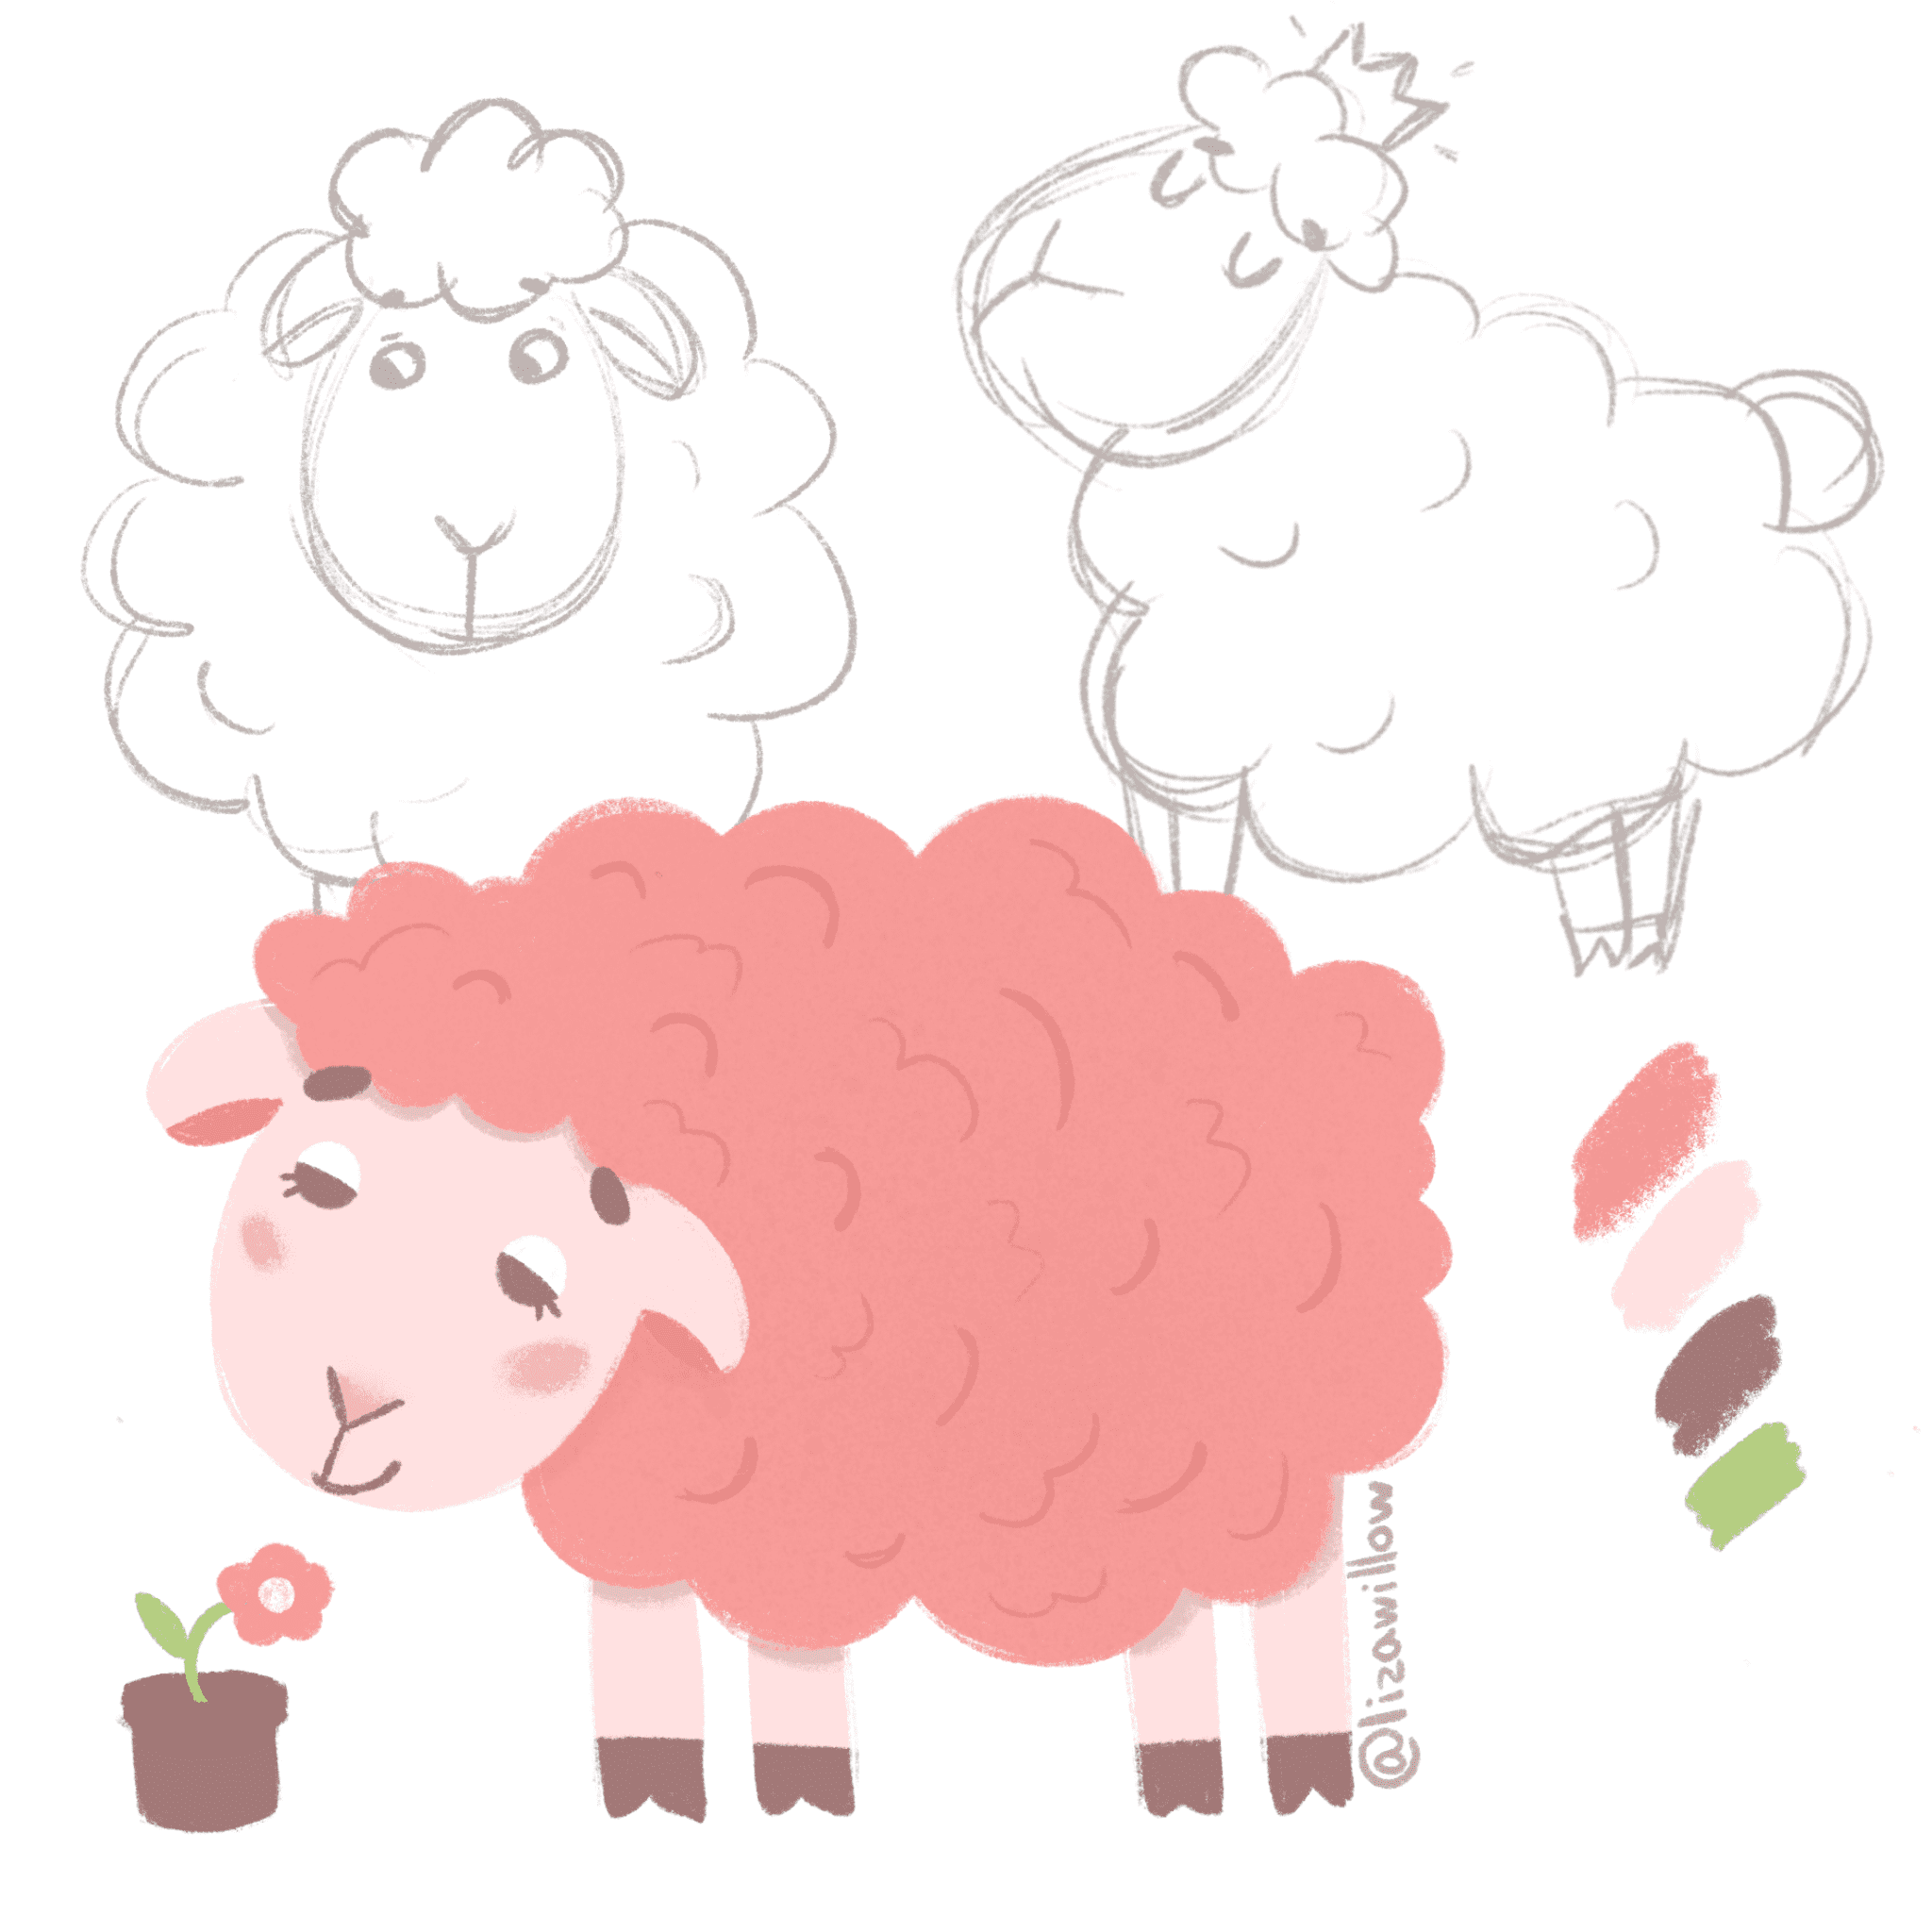 sheep sketch